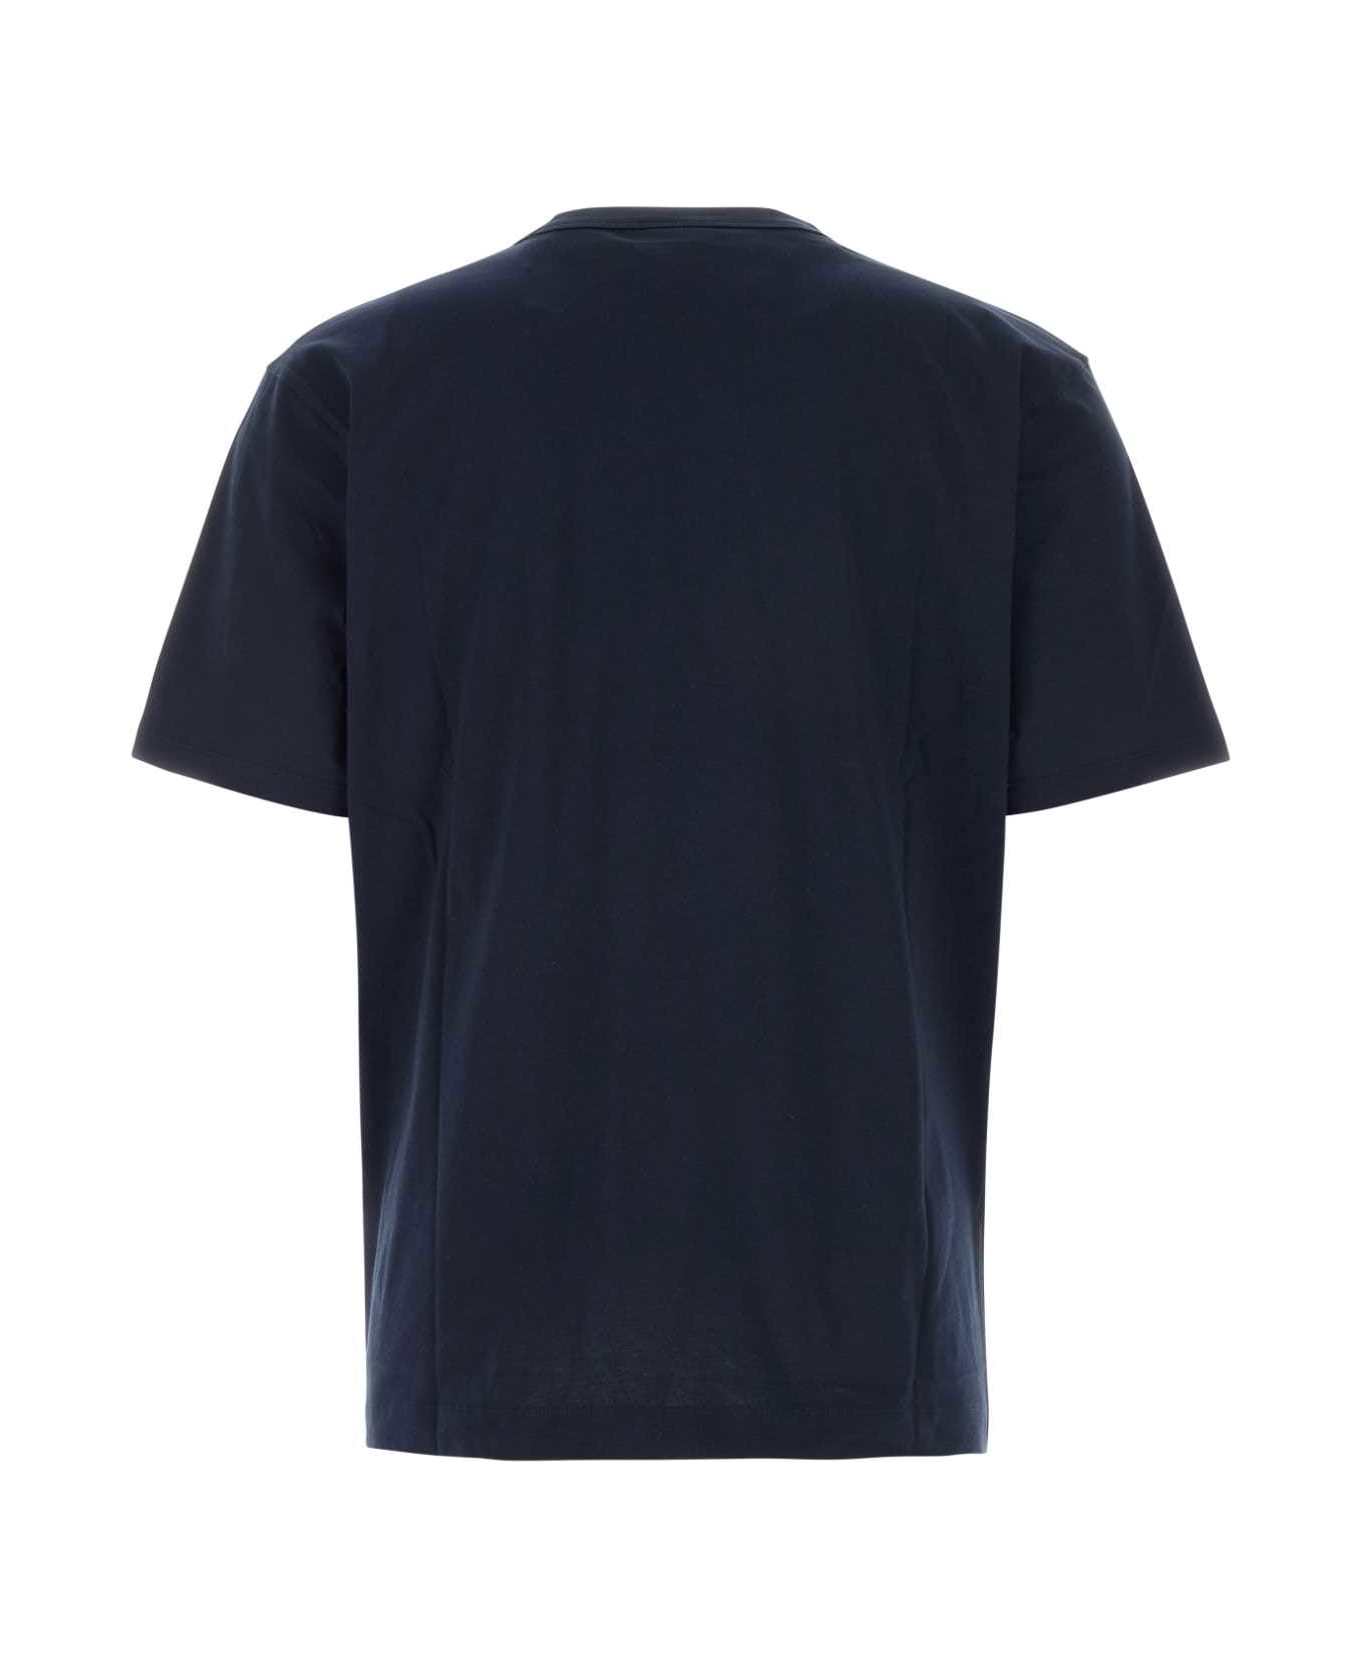 Dries Van Noten Midnight Blue Cotton Heer T-shirt - NAVY